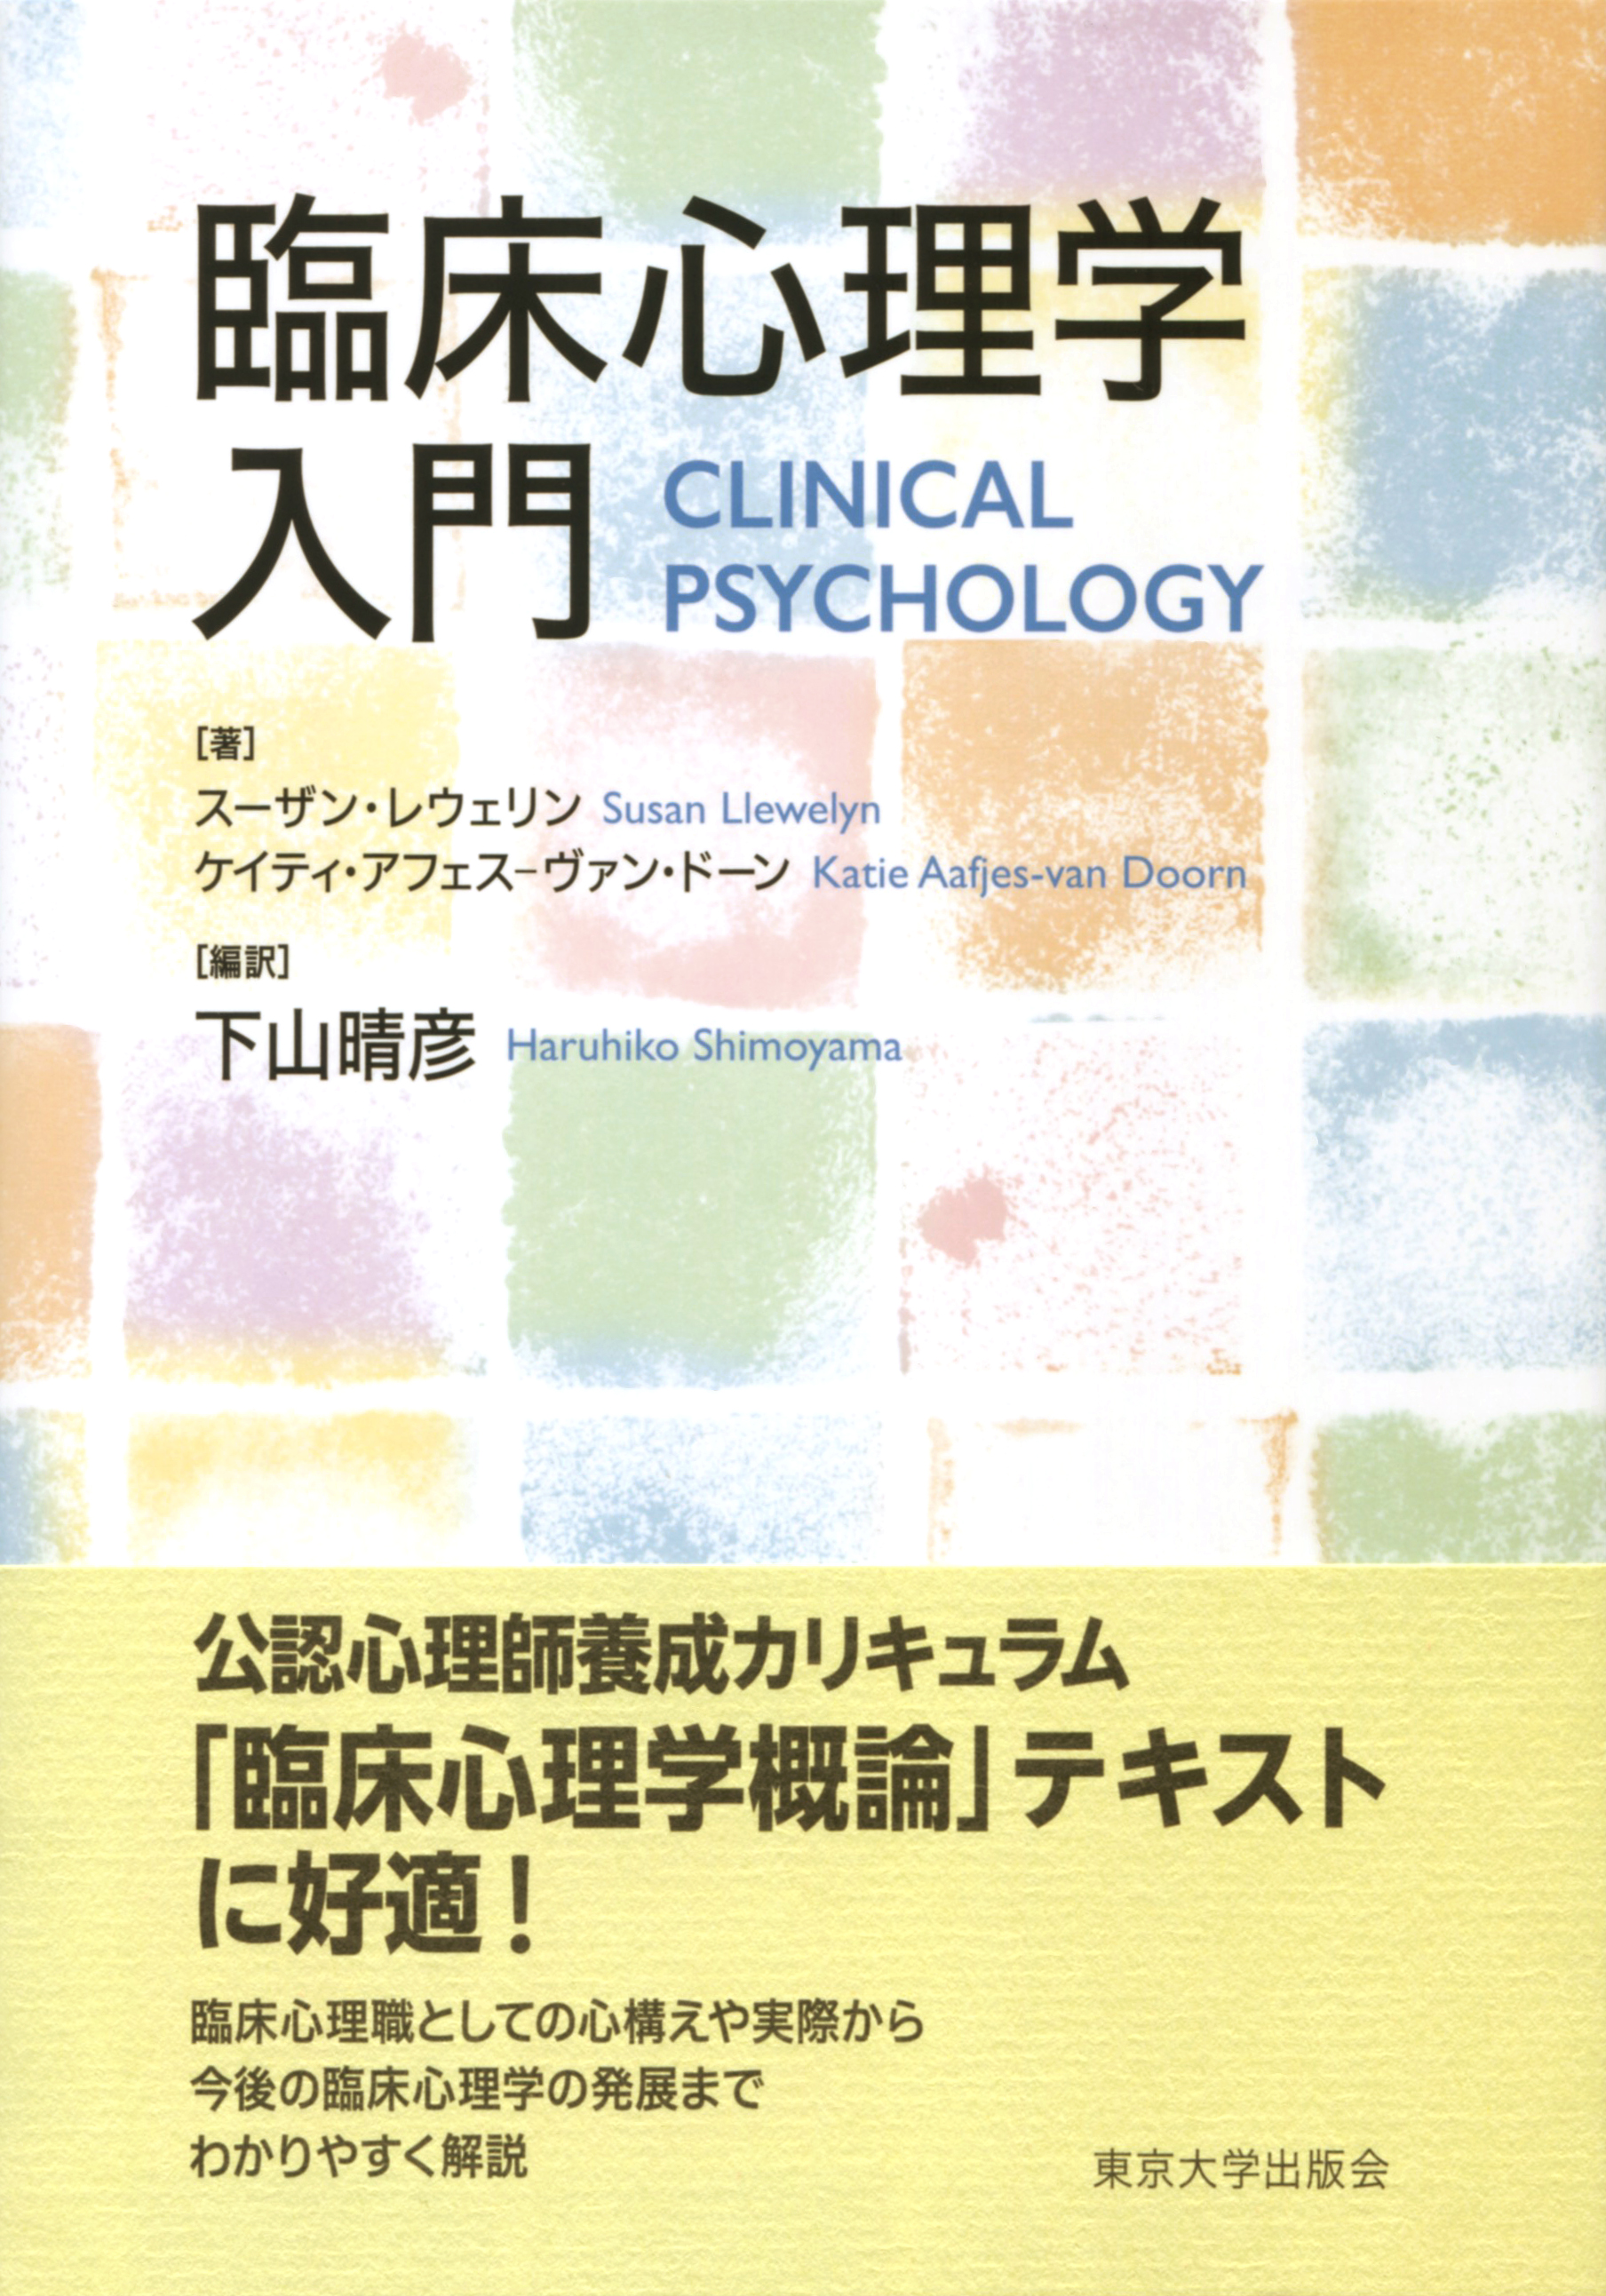 UTokyo BiblioPlaza - 臨床心理学